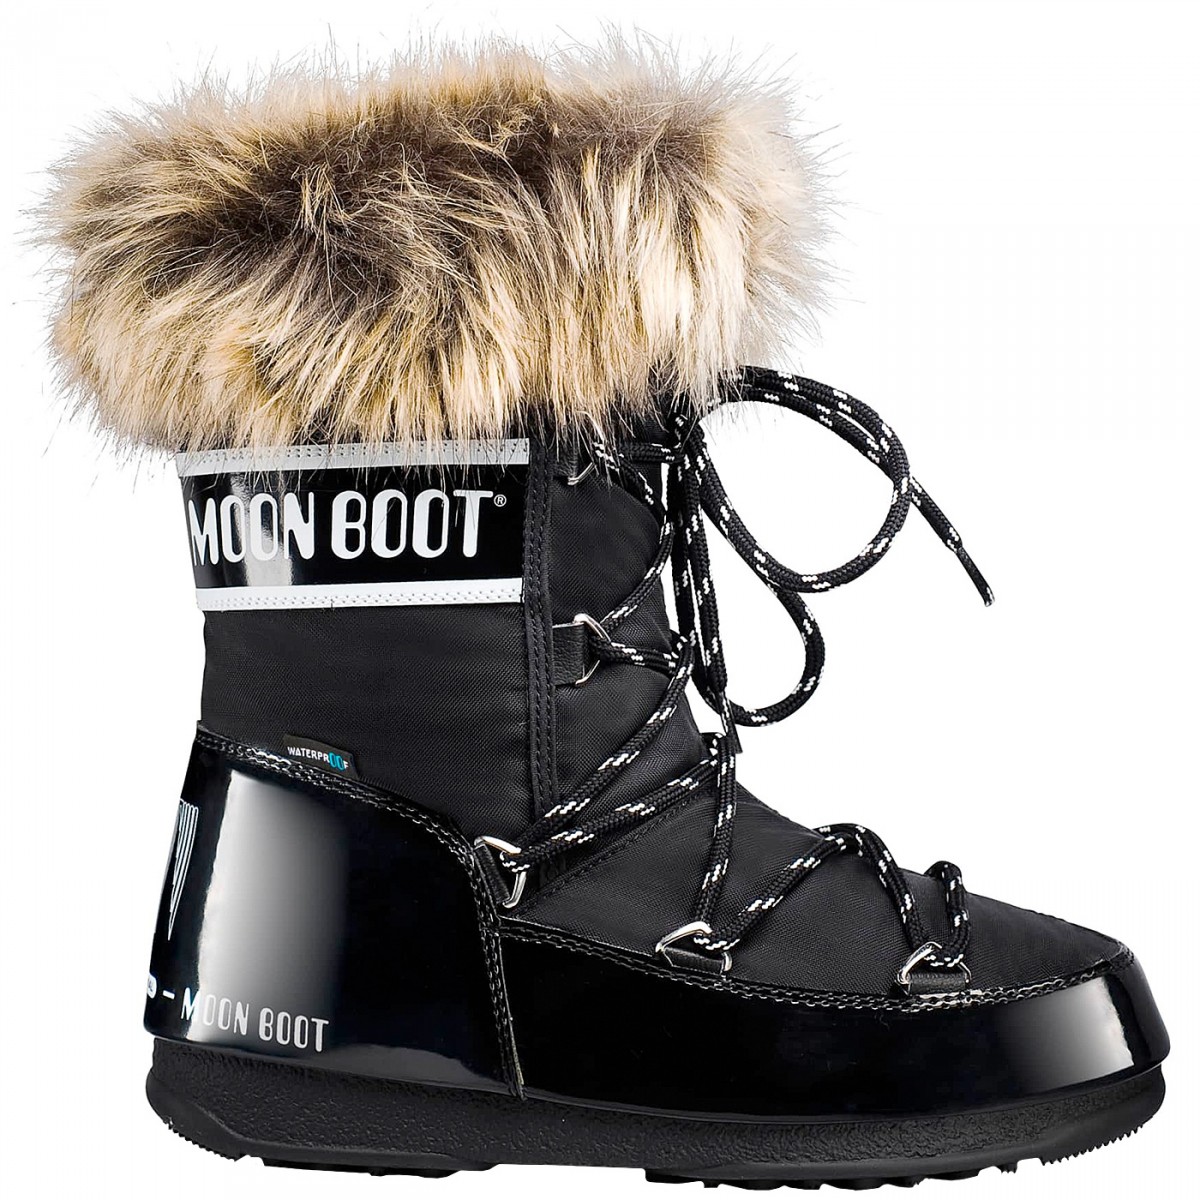 Designer apres ski boots